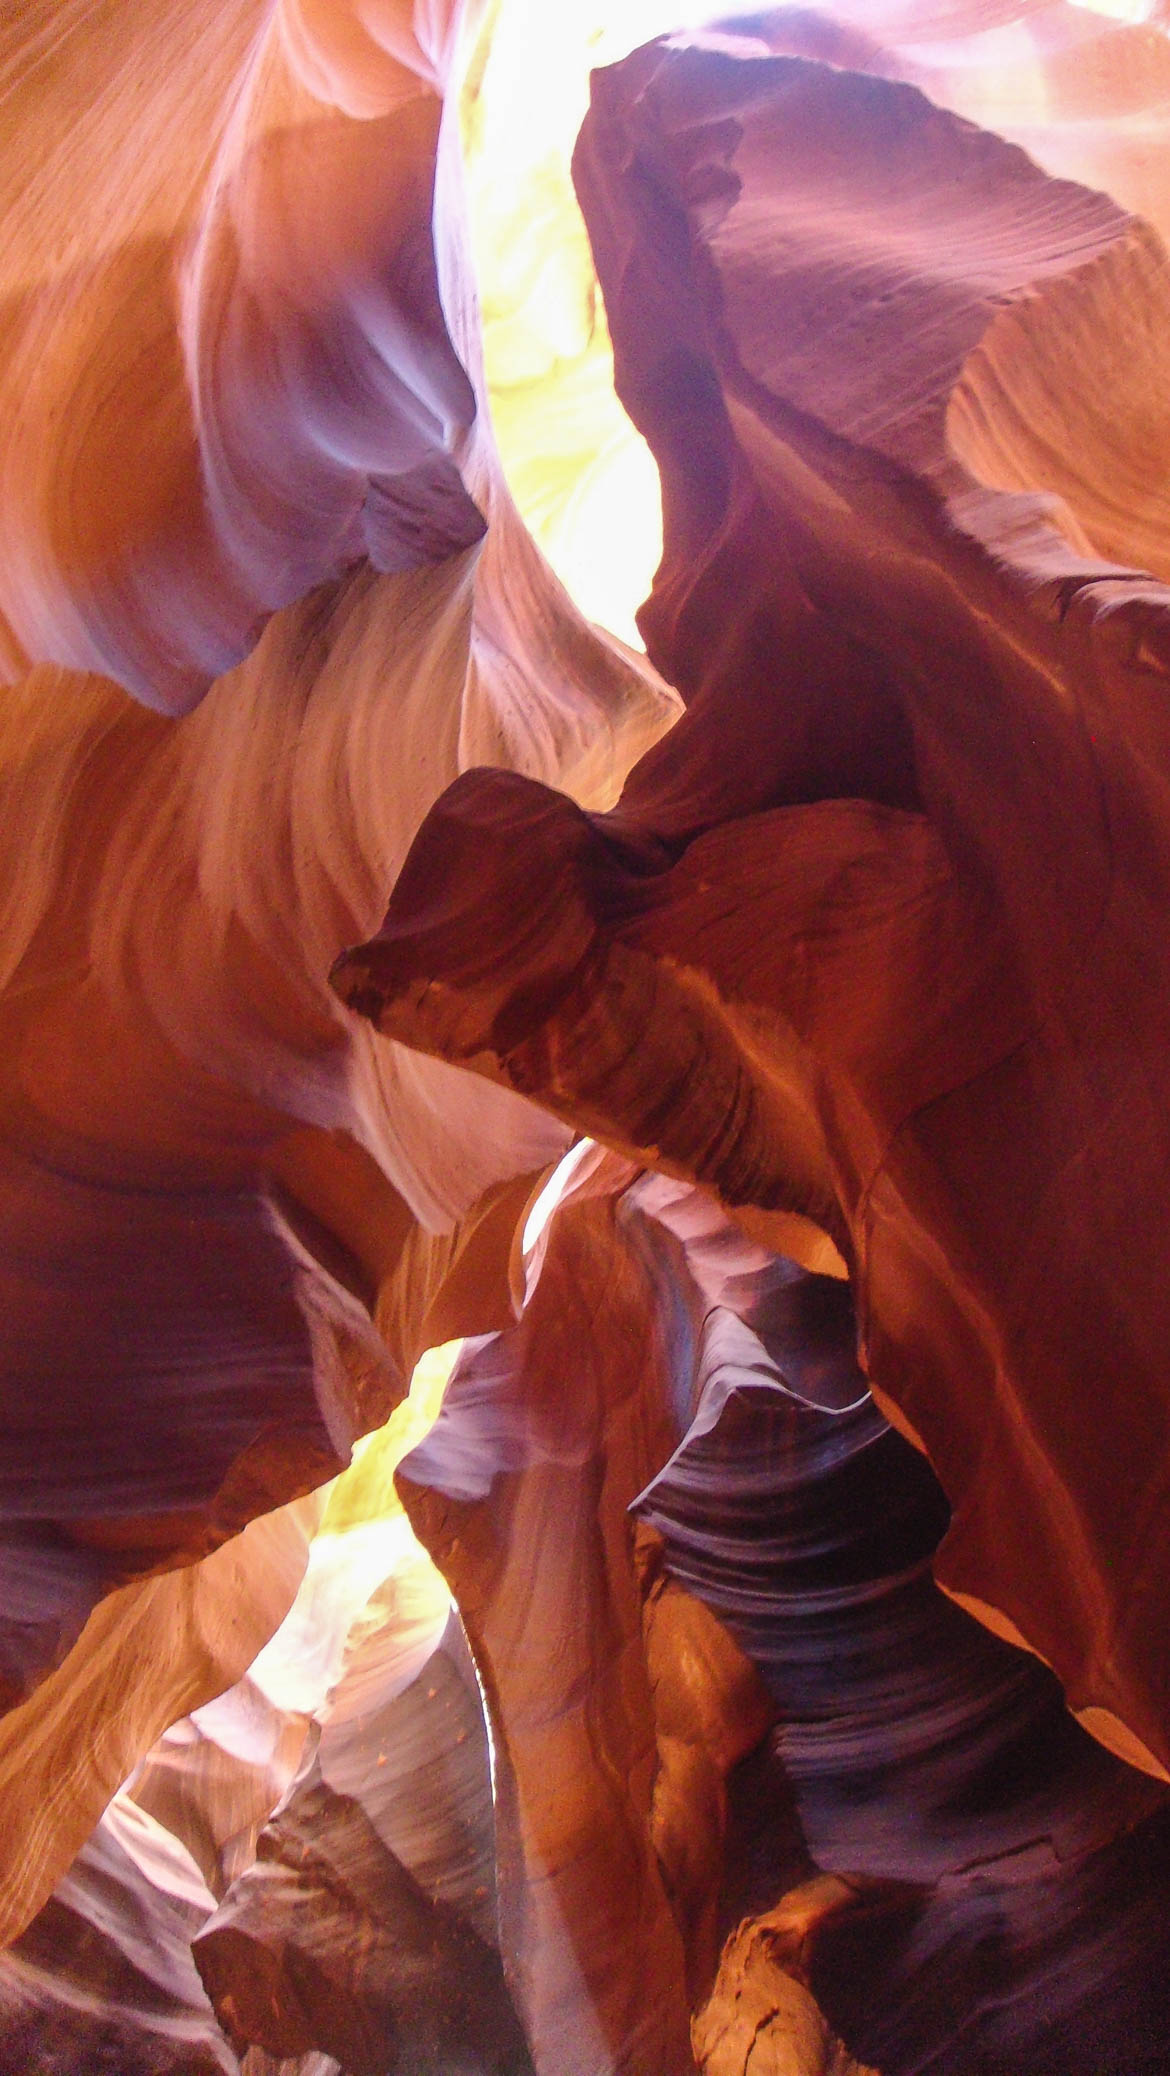 Antelope Canyon - Page - Arizona